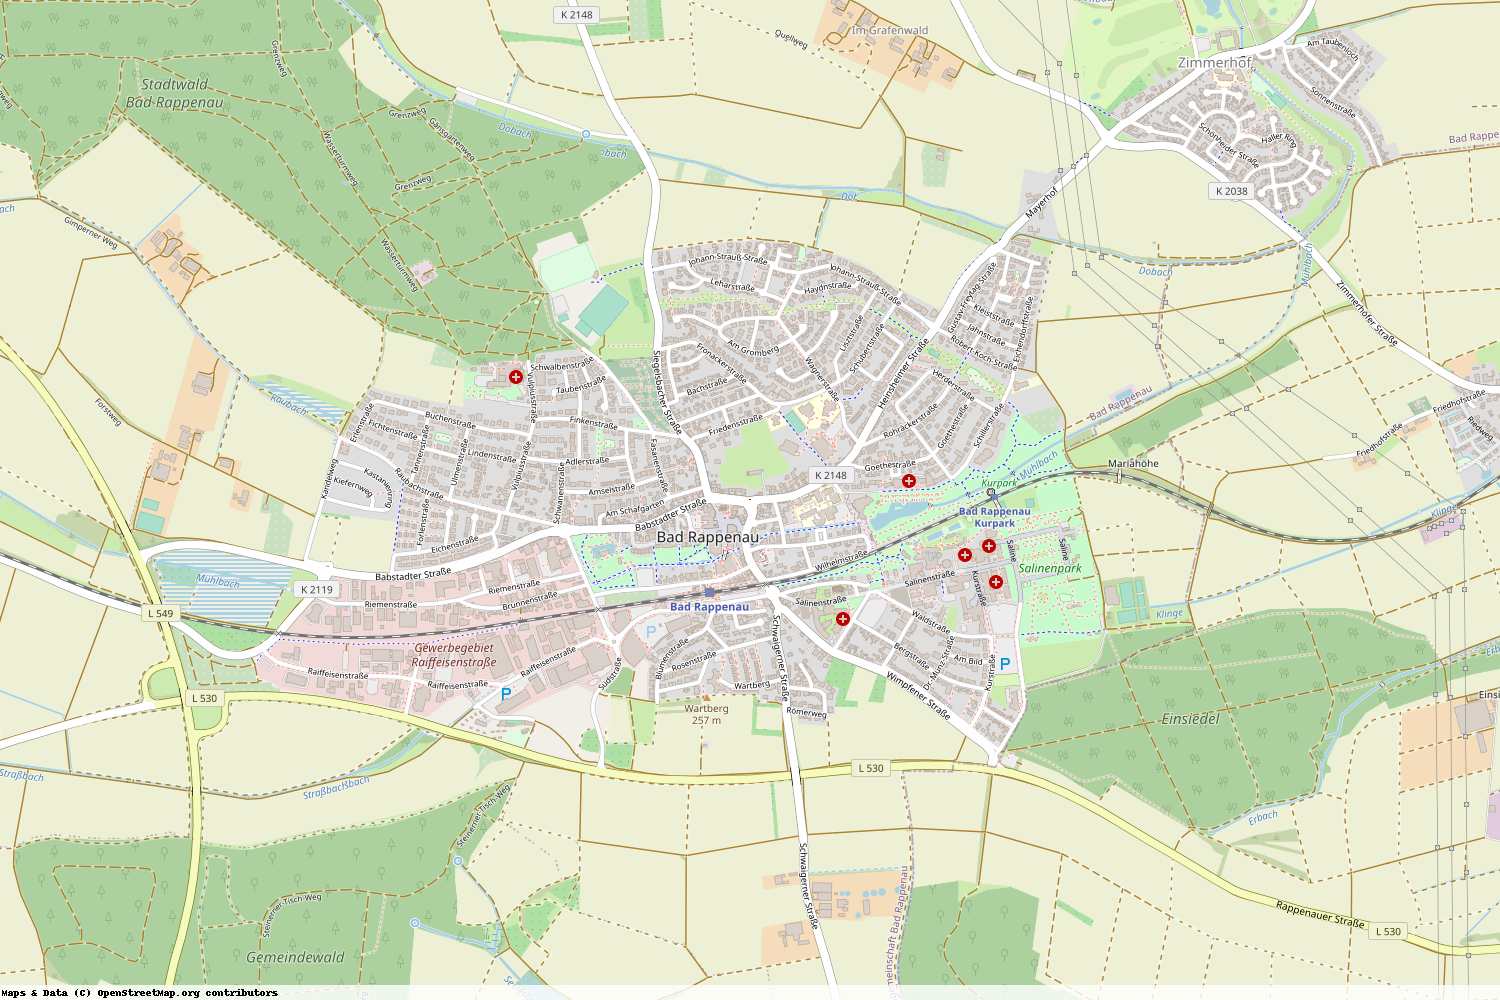 Ist gerade Stromausfall in Baden-Württemberg - Heilbronn - Bad Rappenau?